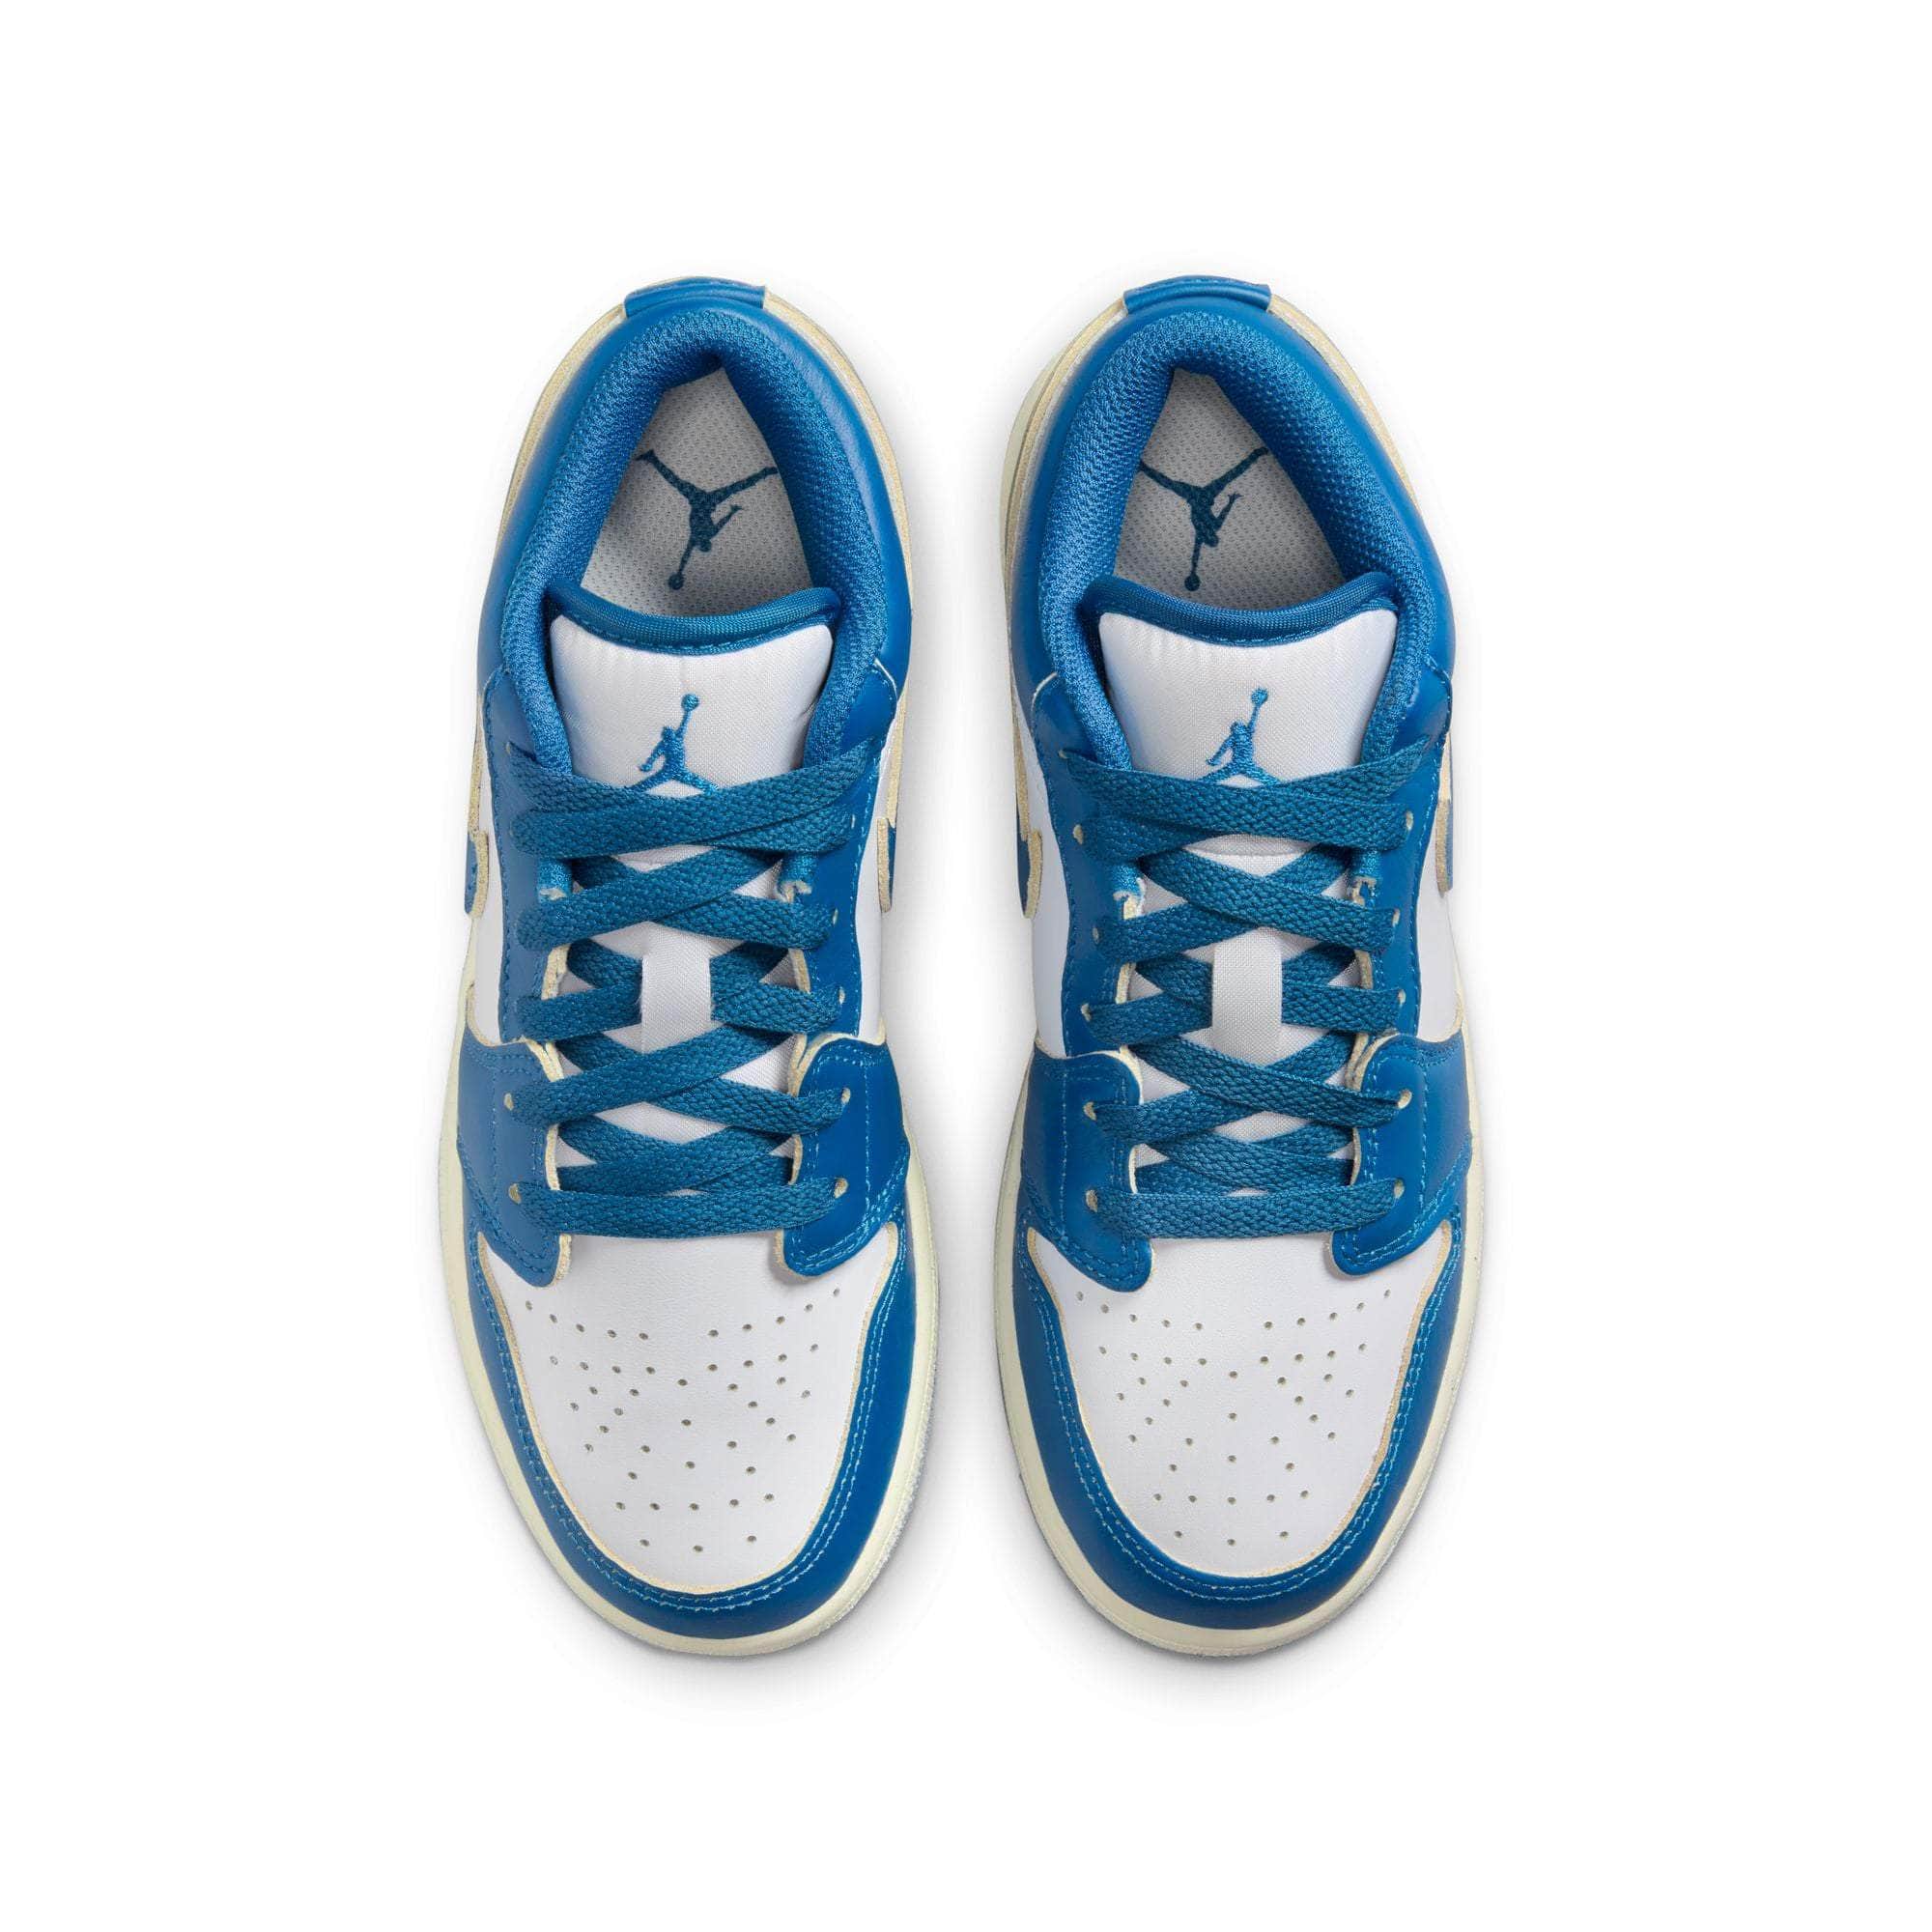 Air Jordan Footwear Air Jordan 1 Low "Industrial Blue" - Boy's GS